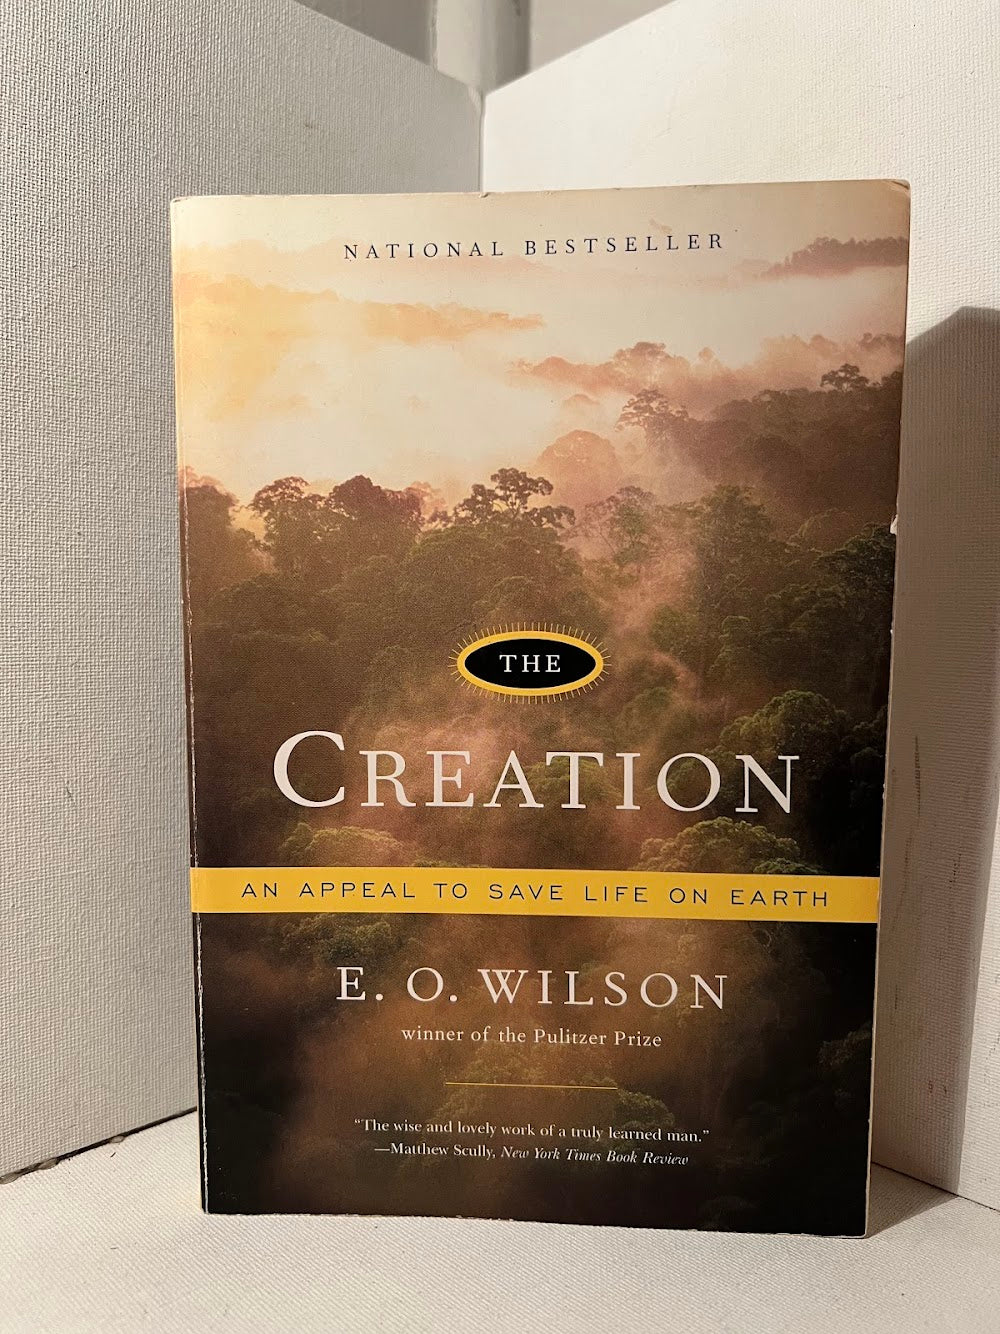 The Creation by E.O. Wilson